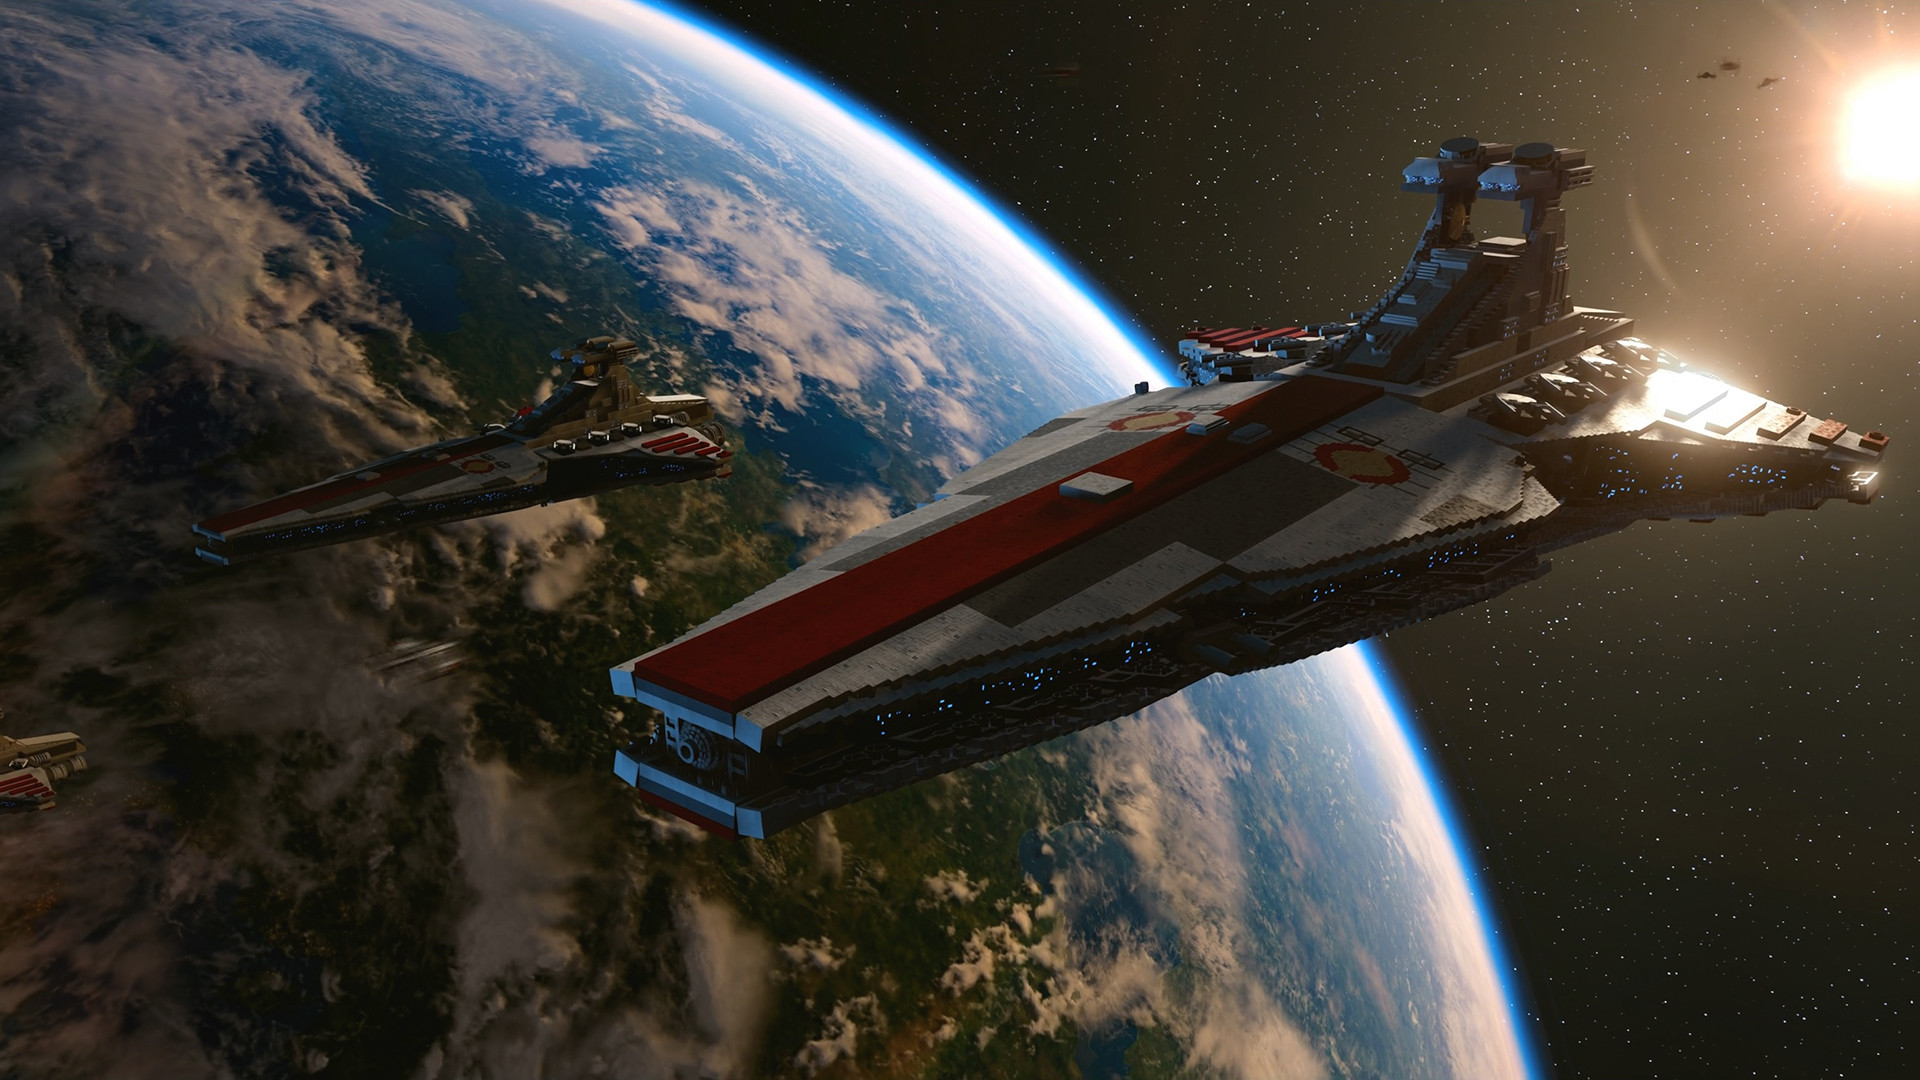 LEGO Star Wars: The Skywalker Saga Galactic Edition Steam Altergift